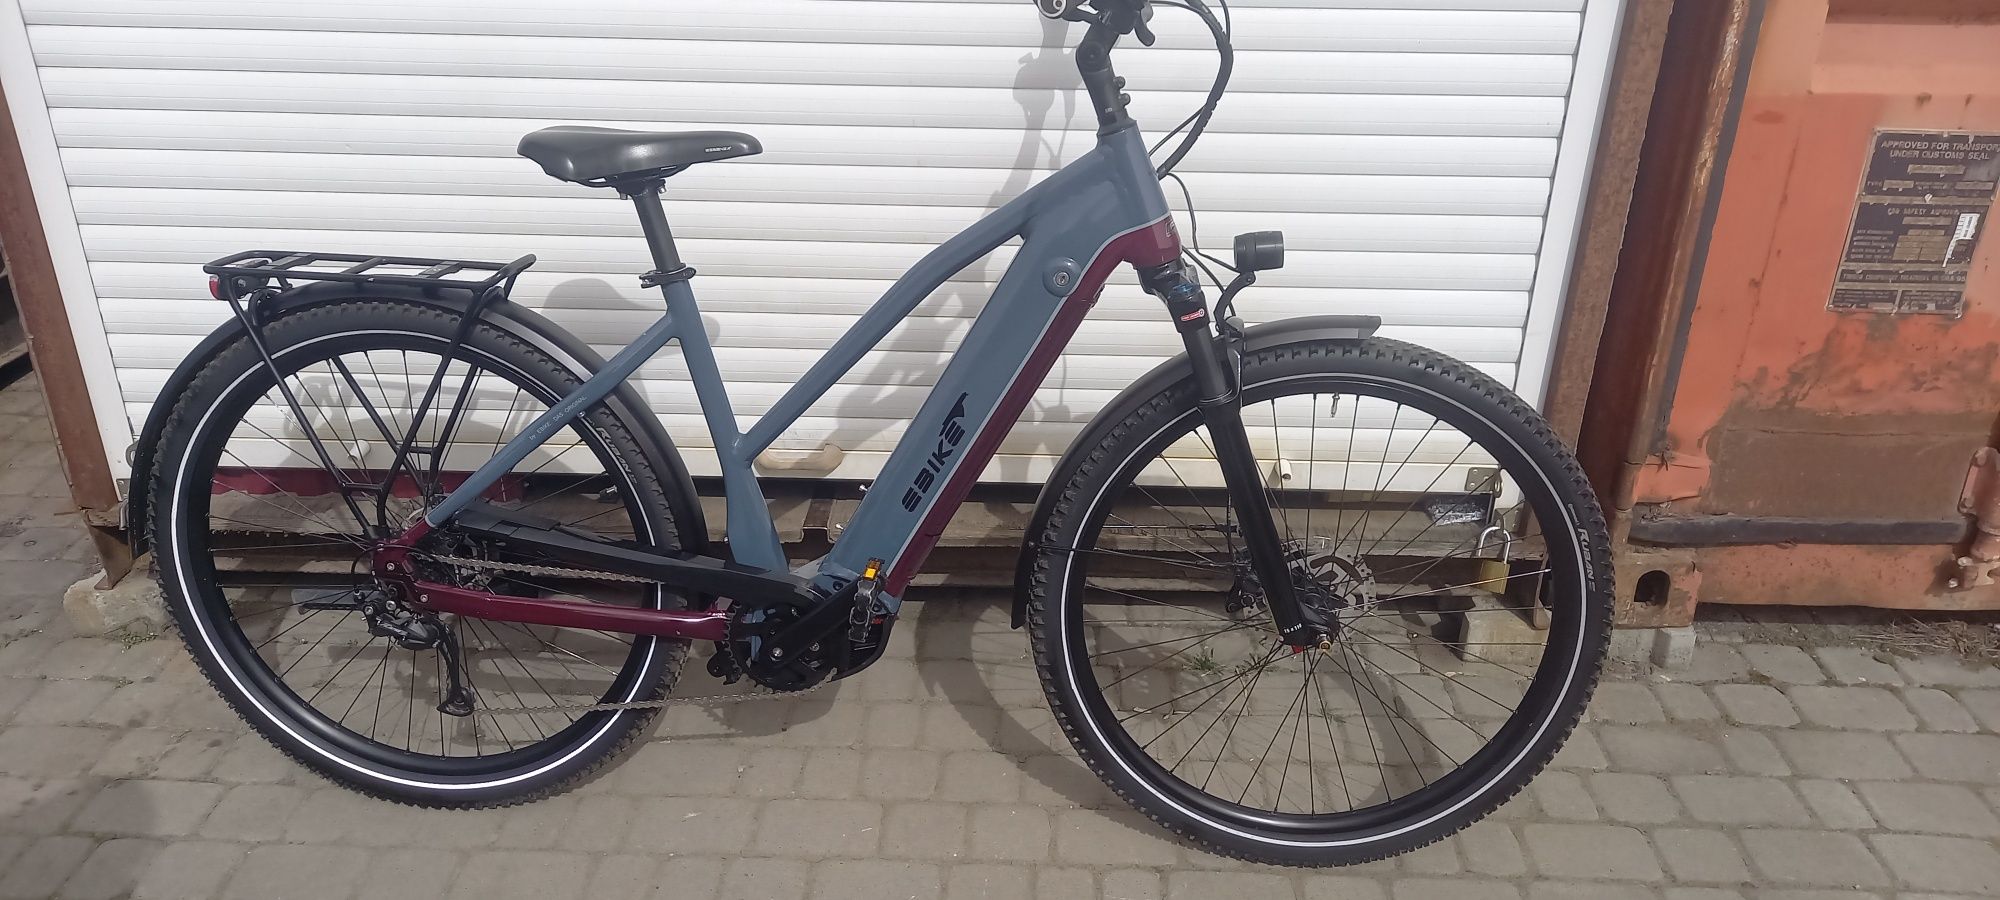 Електро велосипед Ebike (bosch) на 29×2.1 резині.